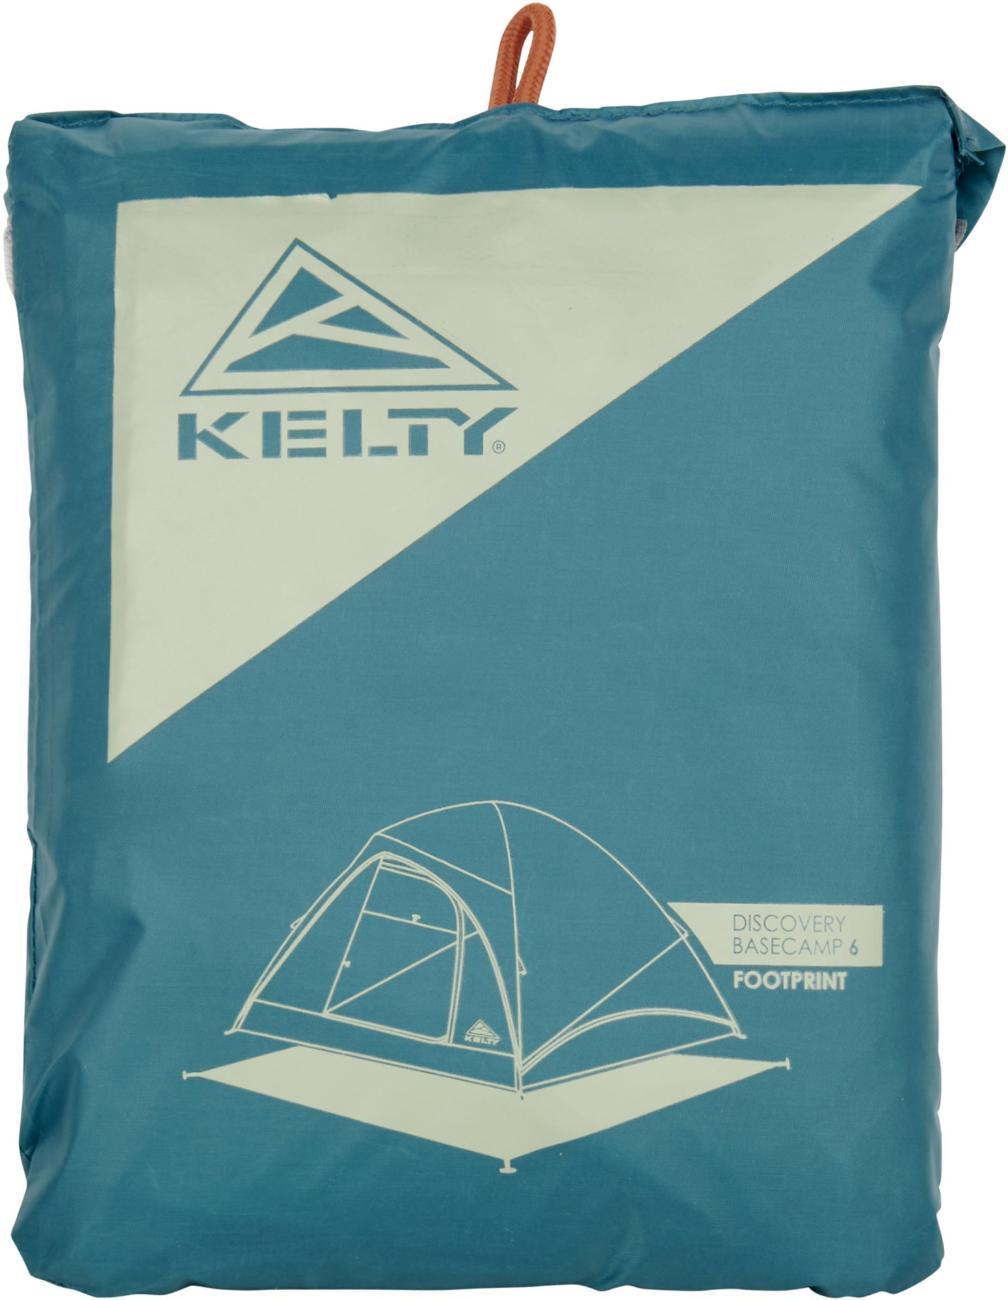 Базовый лагерь Discovery 6 Kelty